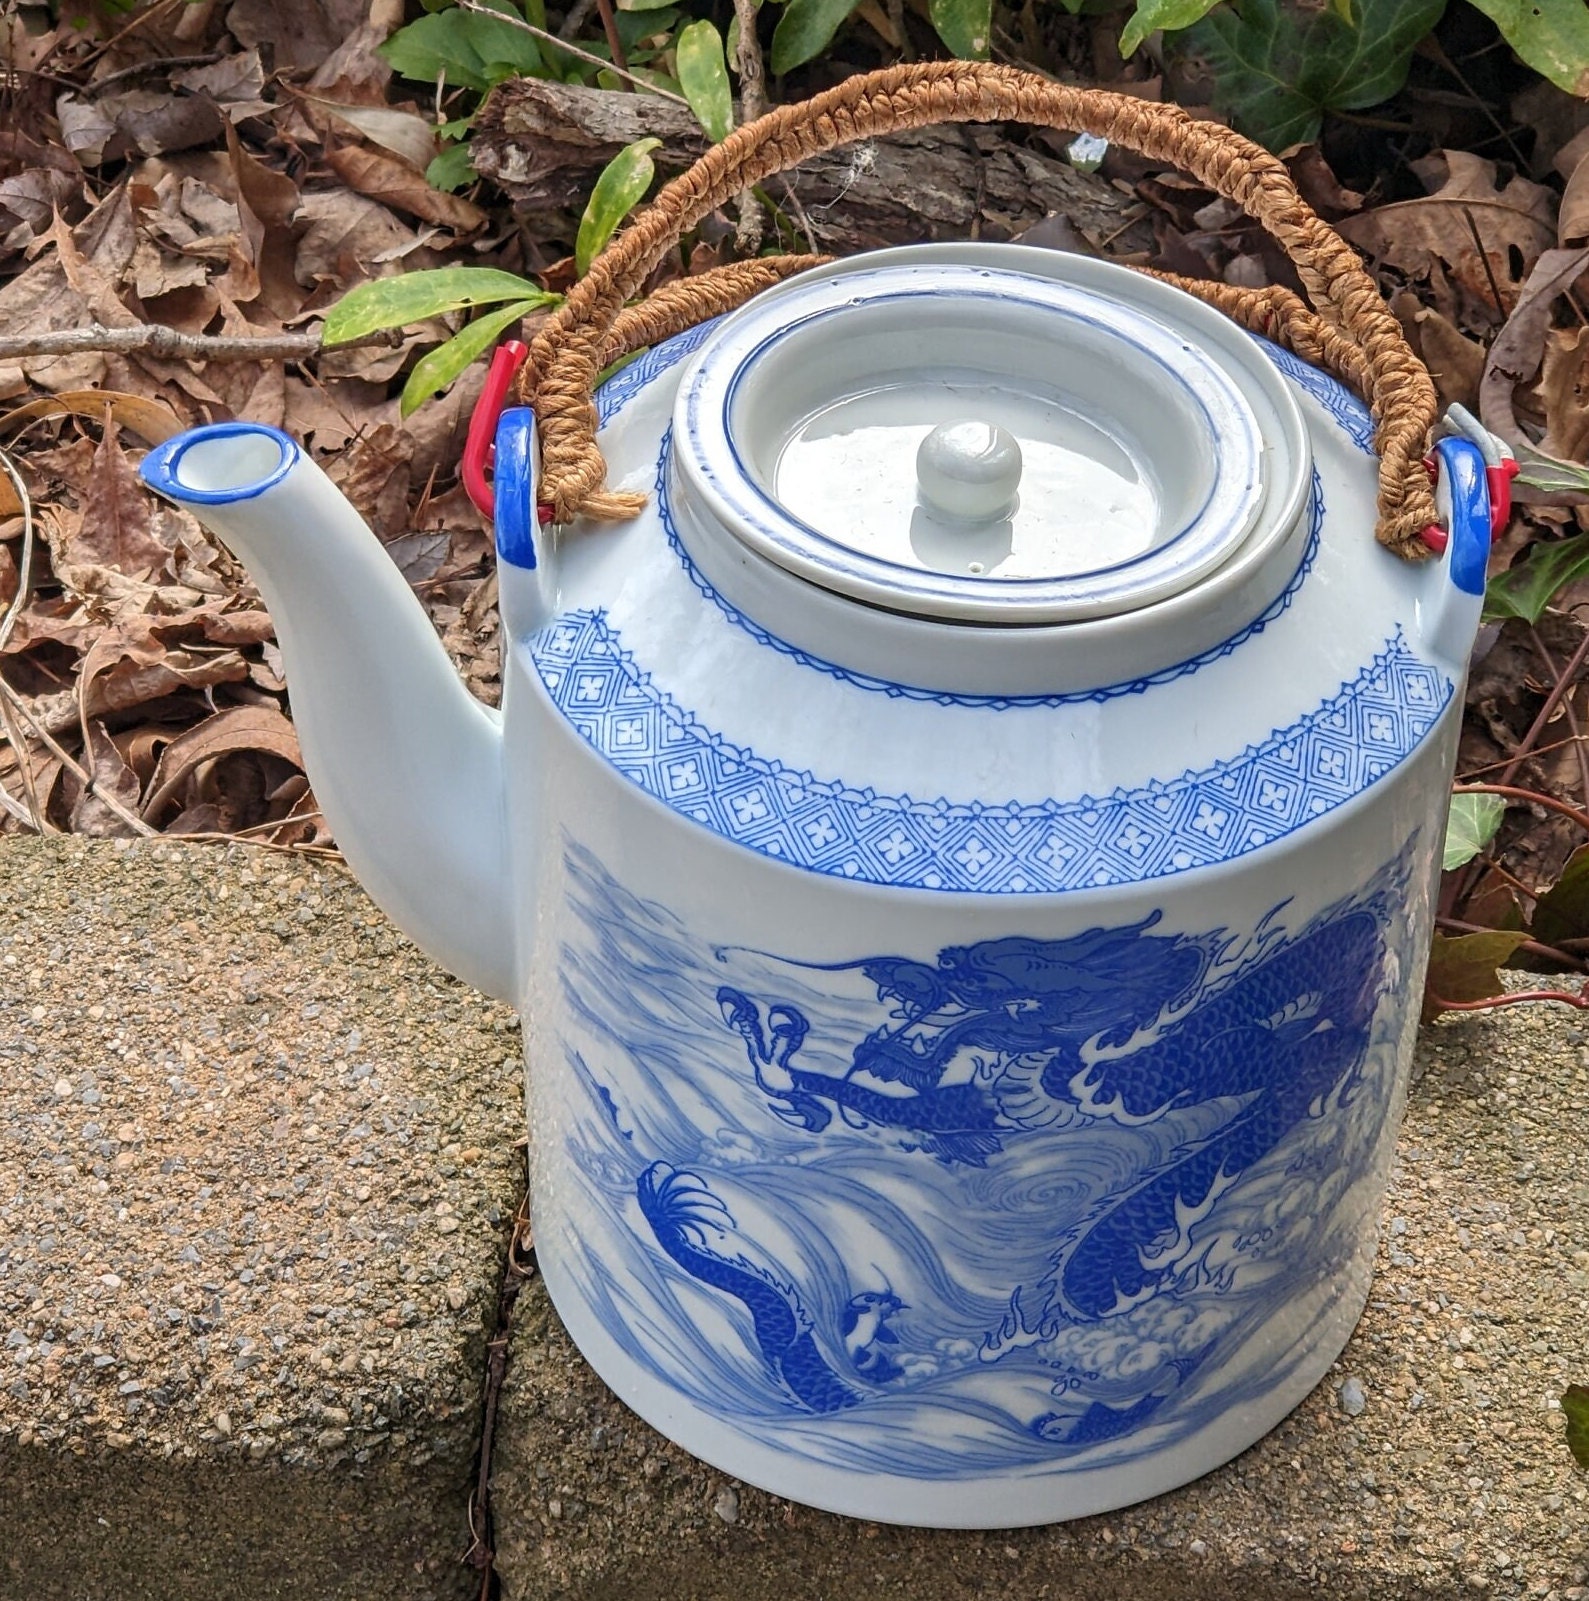 Ceramic Large Teapot, Turquoise Teapot, 1.4 Liter Pot, Hand Made